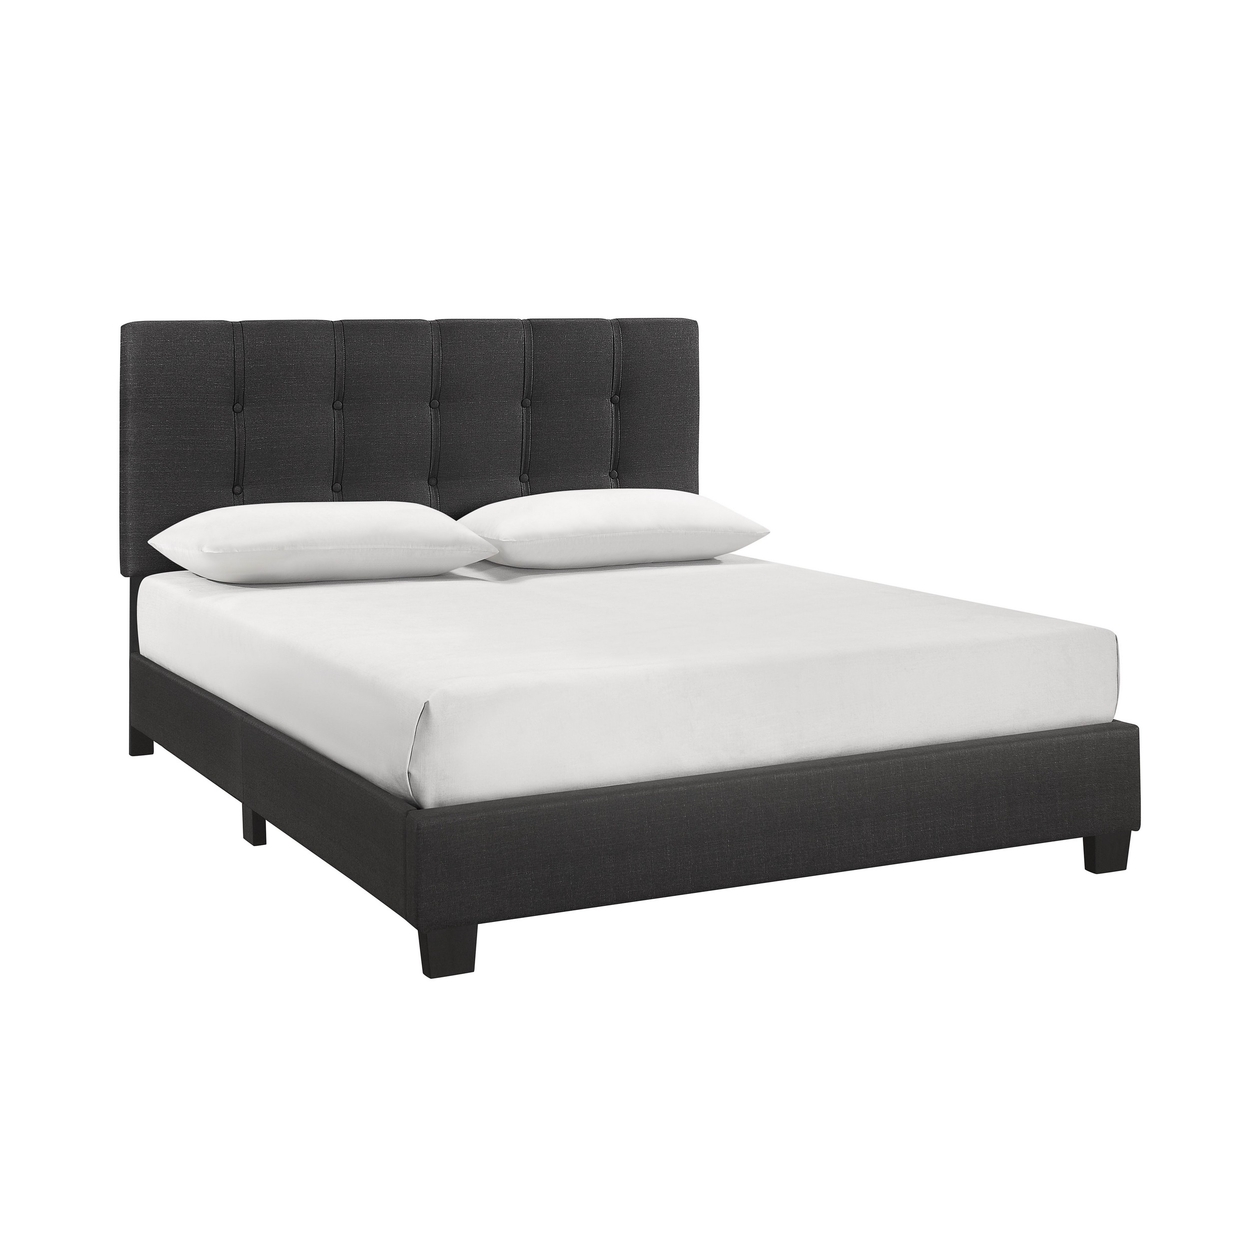 Kody Full Bed, Fabric Upholstered, Tufted Headboard, Low Profile, Dark Gray- Saltoro Sherpi